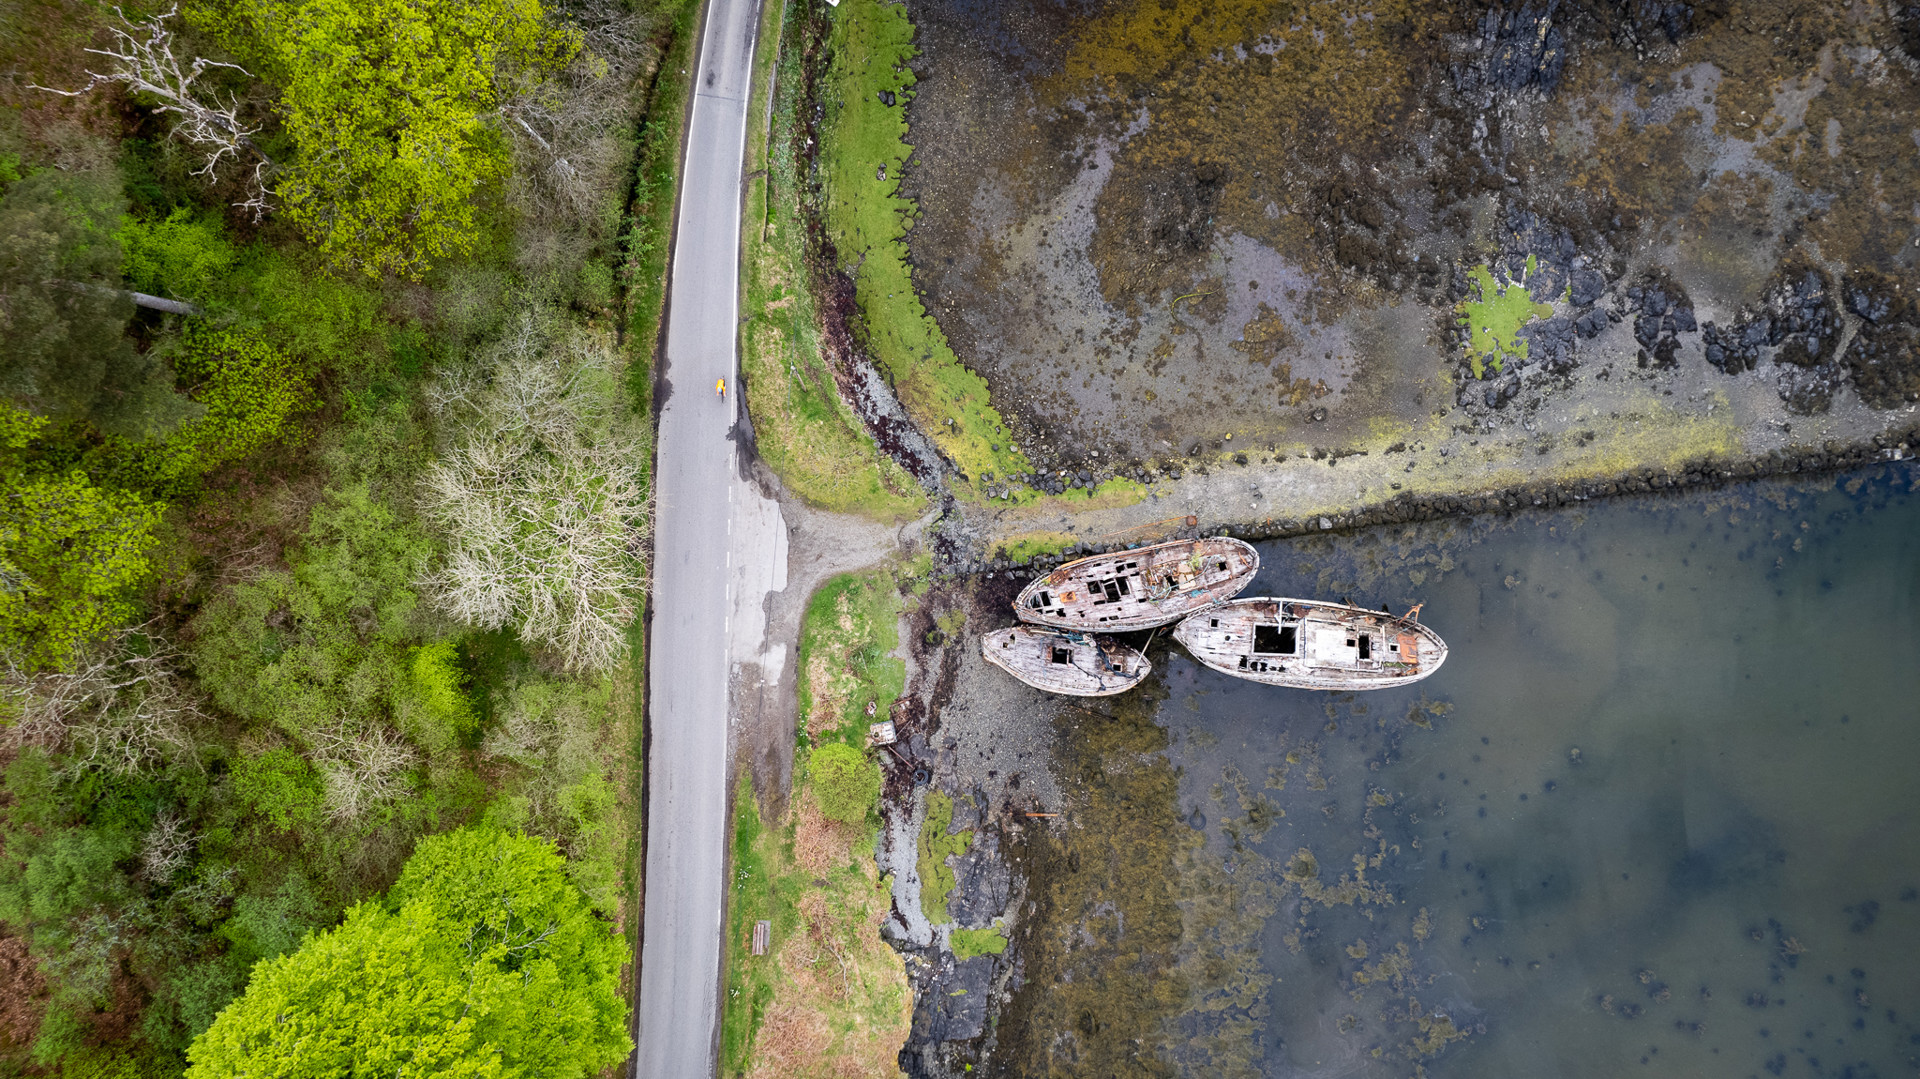 Background image - DJI 0395_drone shot of fishing boats